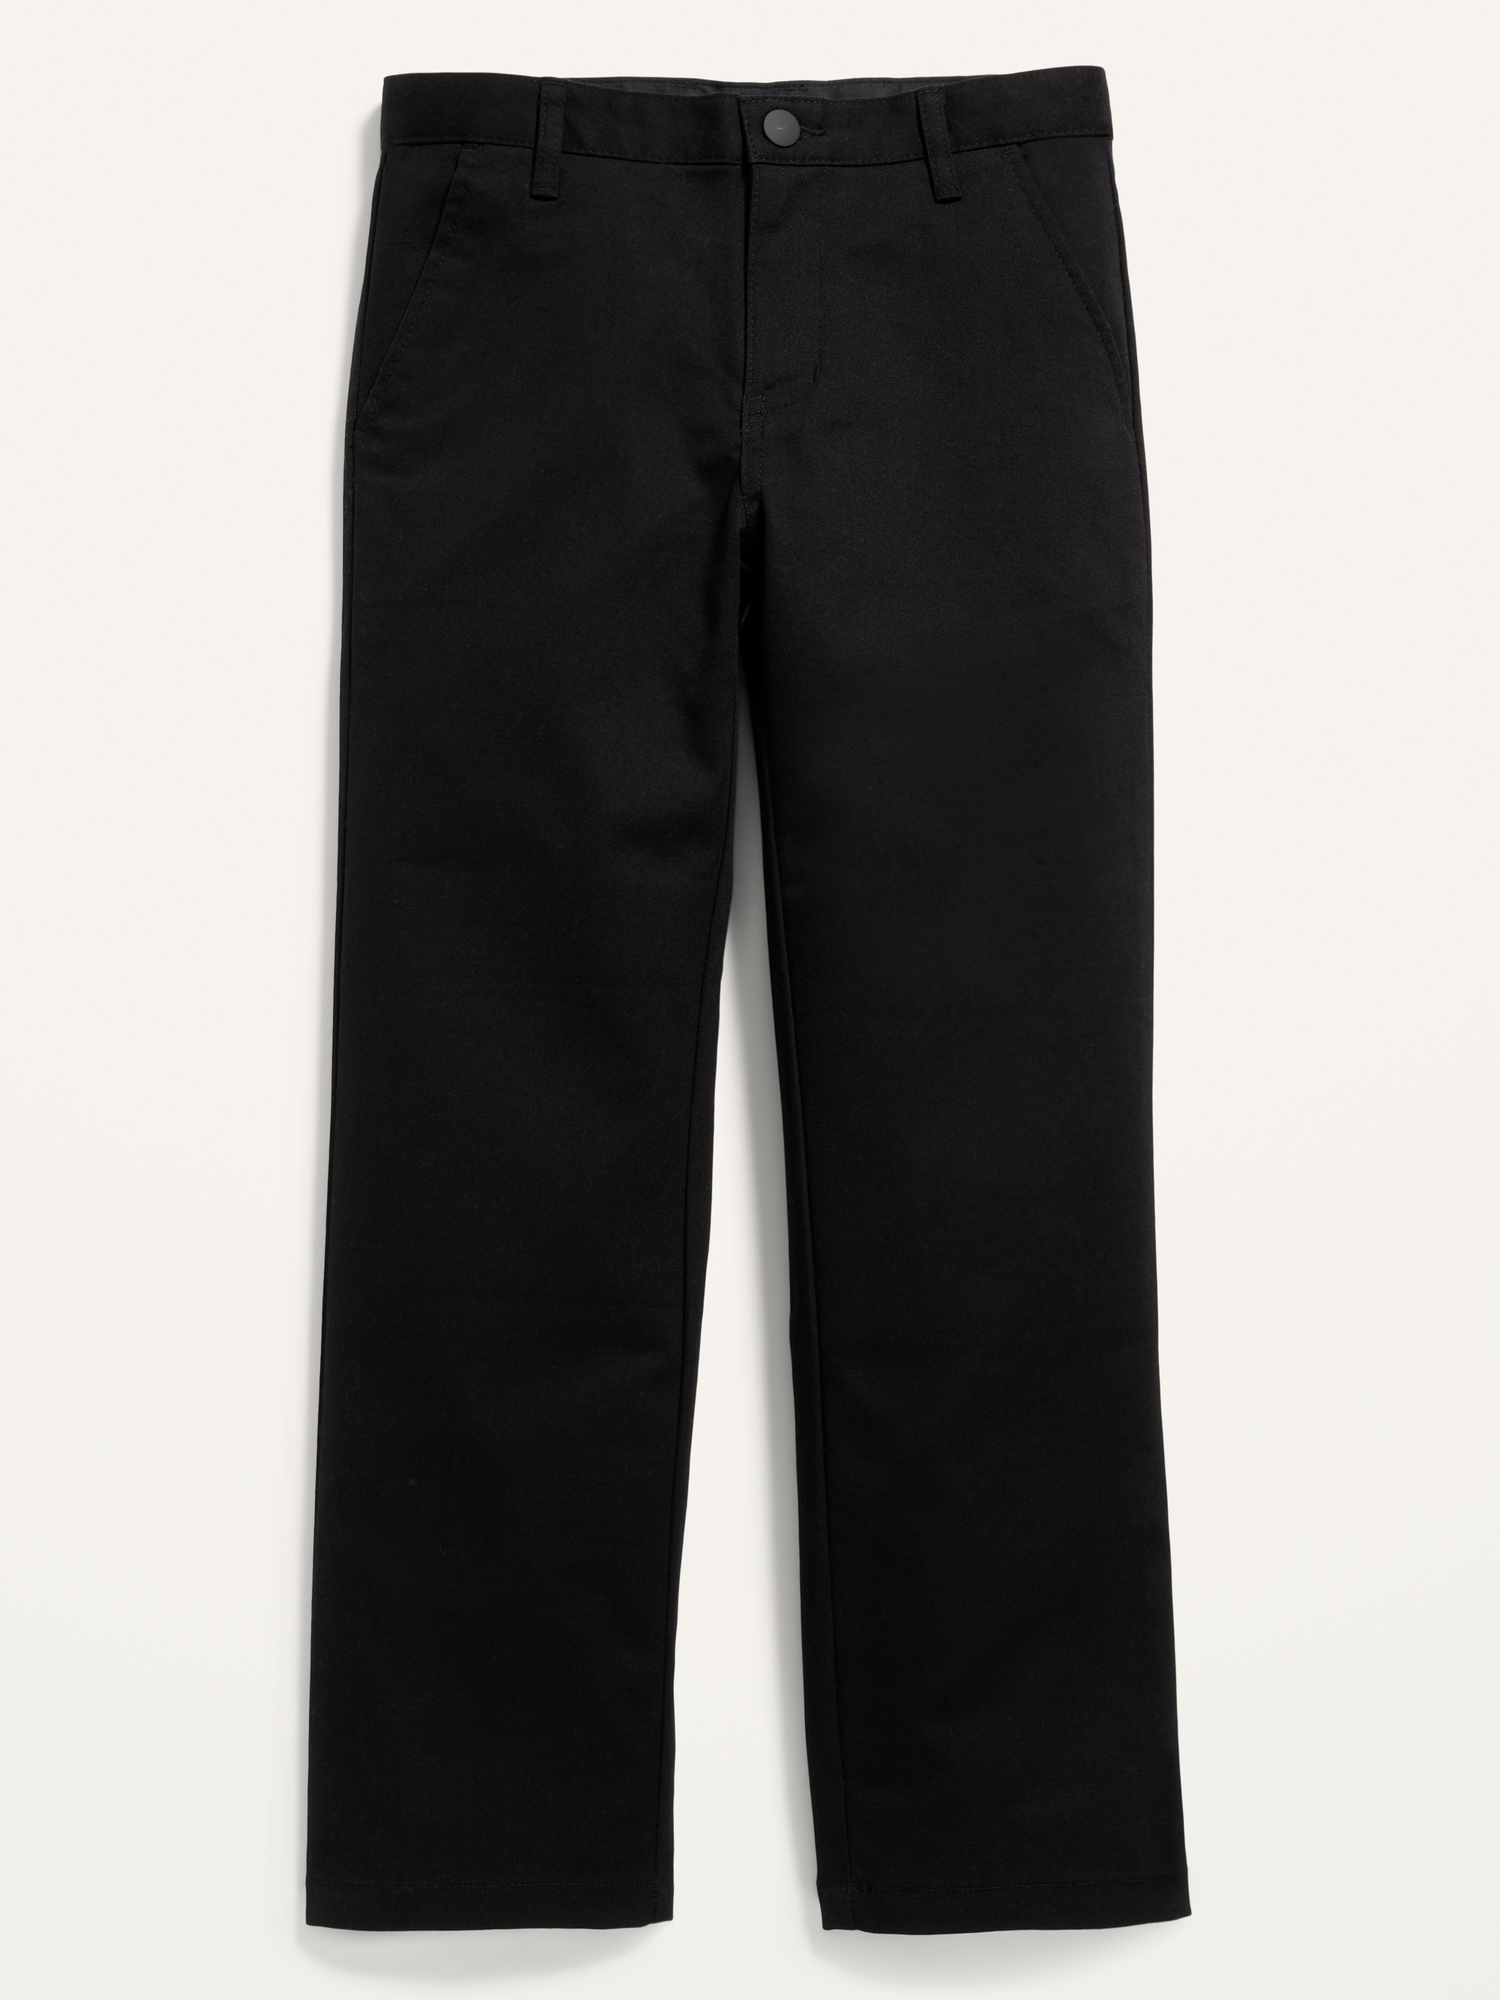 Old Navy Straight Uniform Pants for Boys black. 1